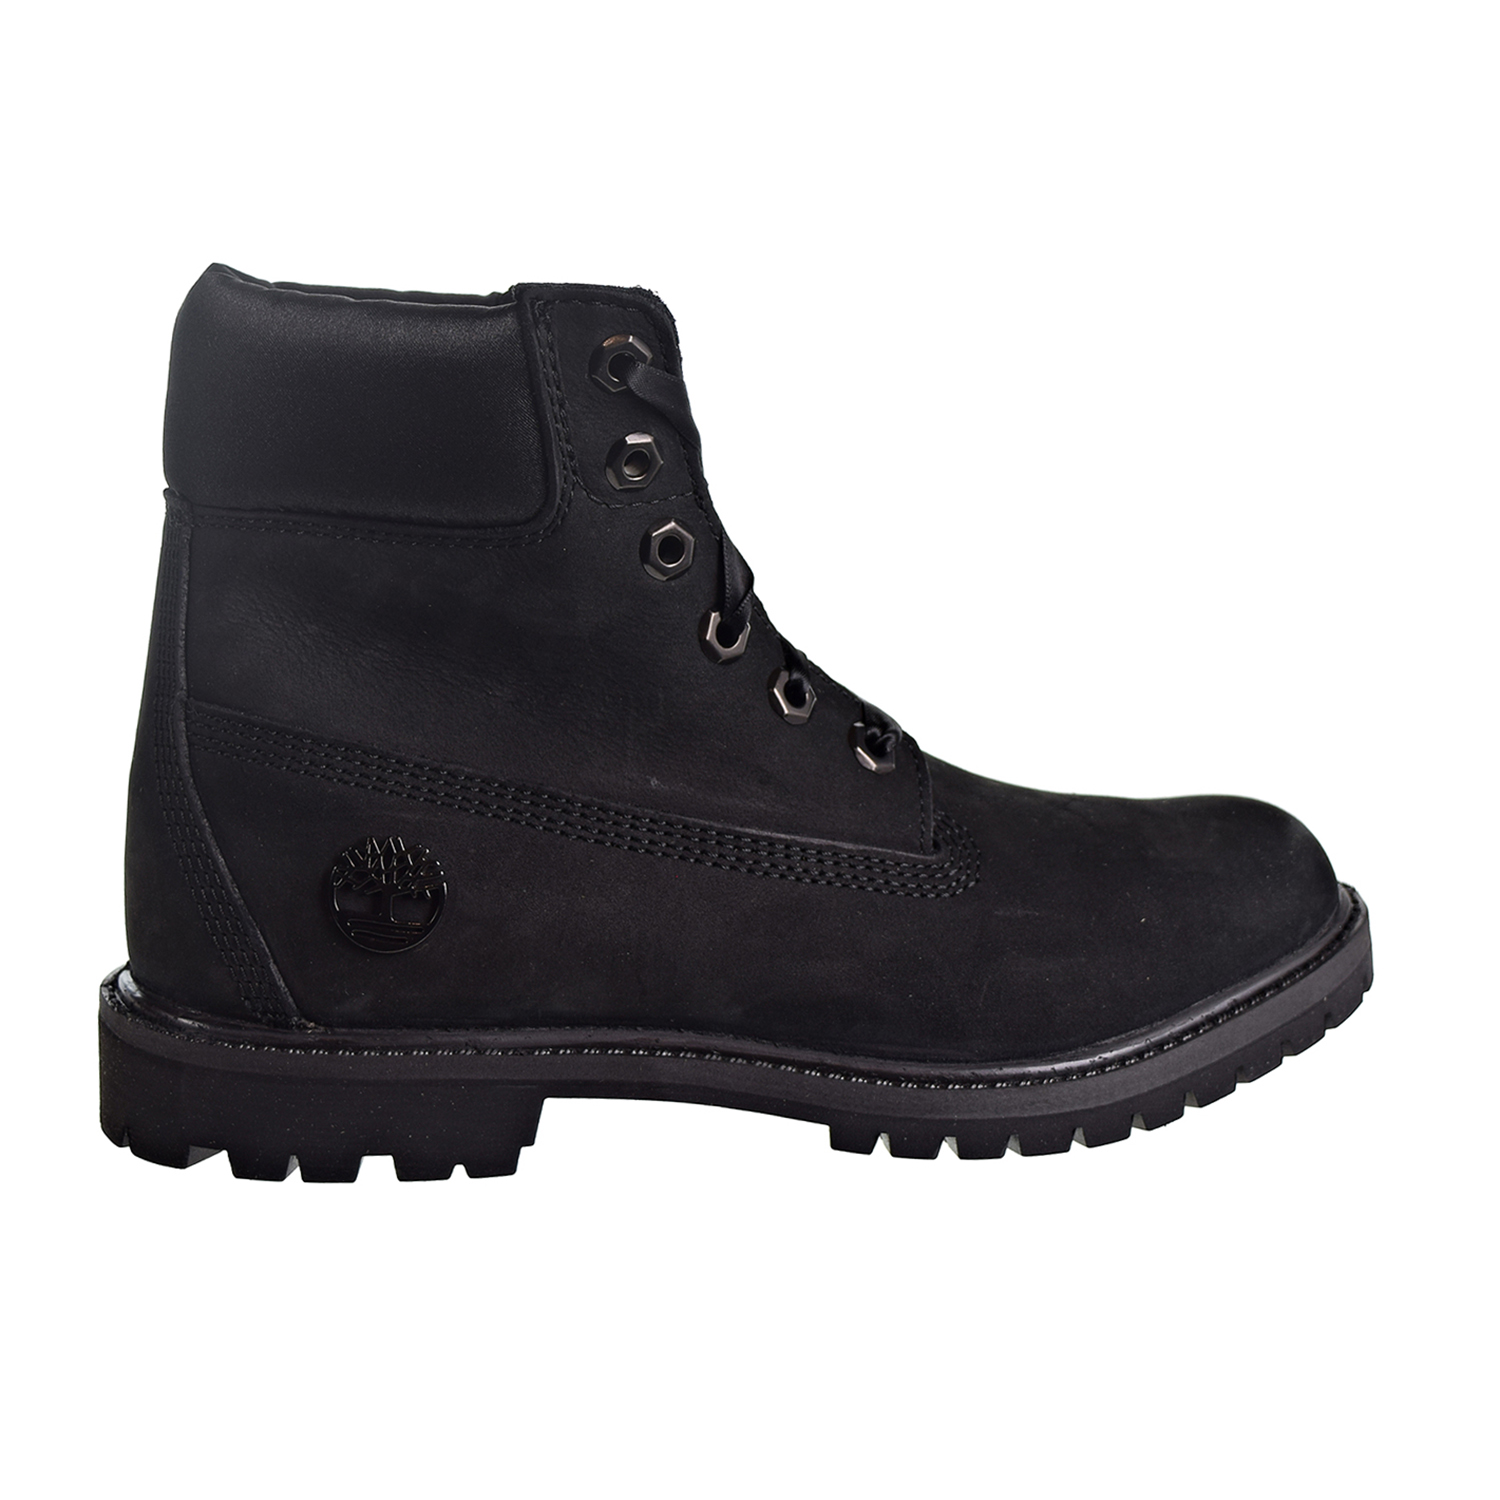 Timberland 6' Premium Boot Women's Shoes Black-Satin TB0A1TJQ | eBay